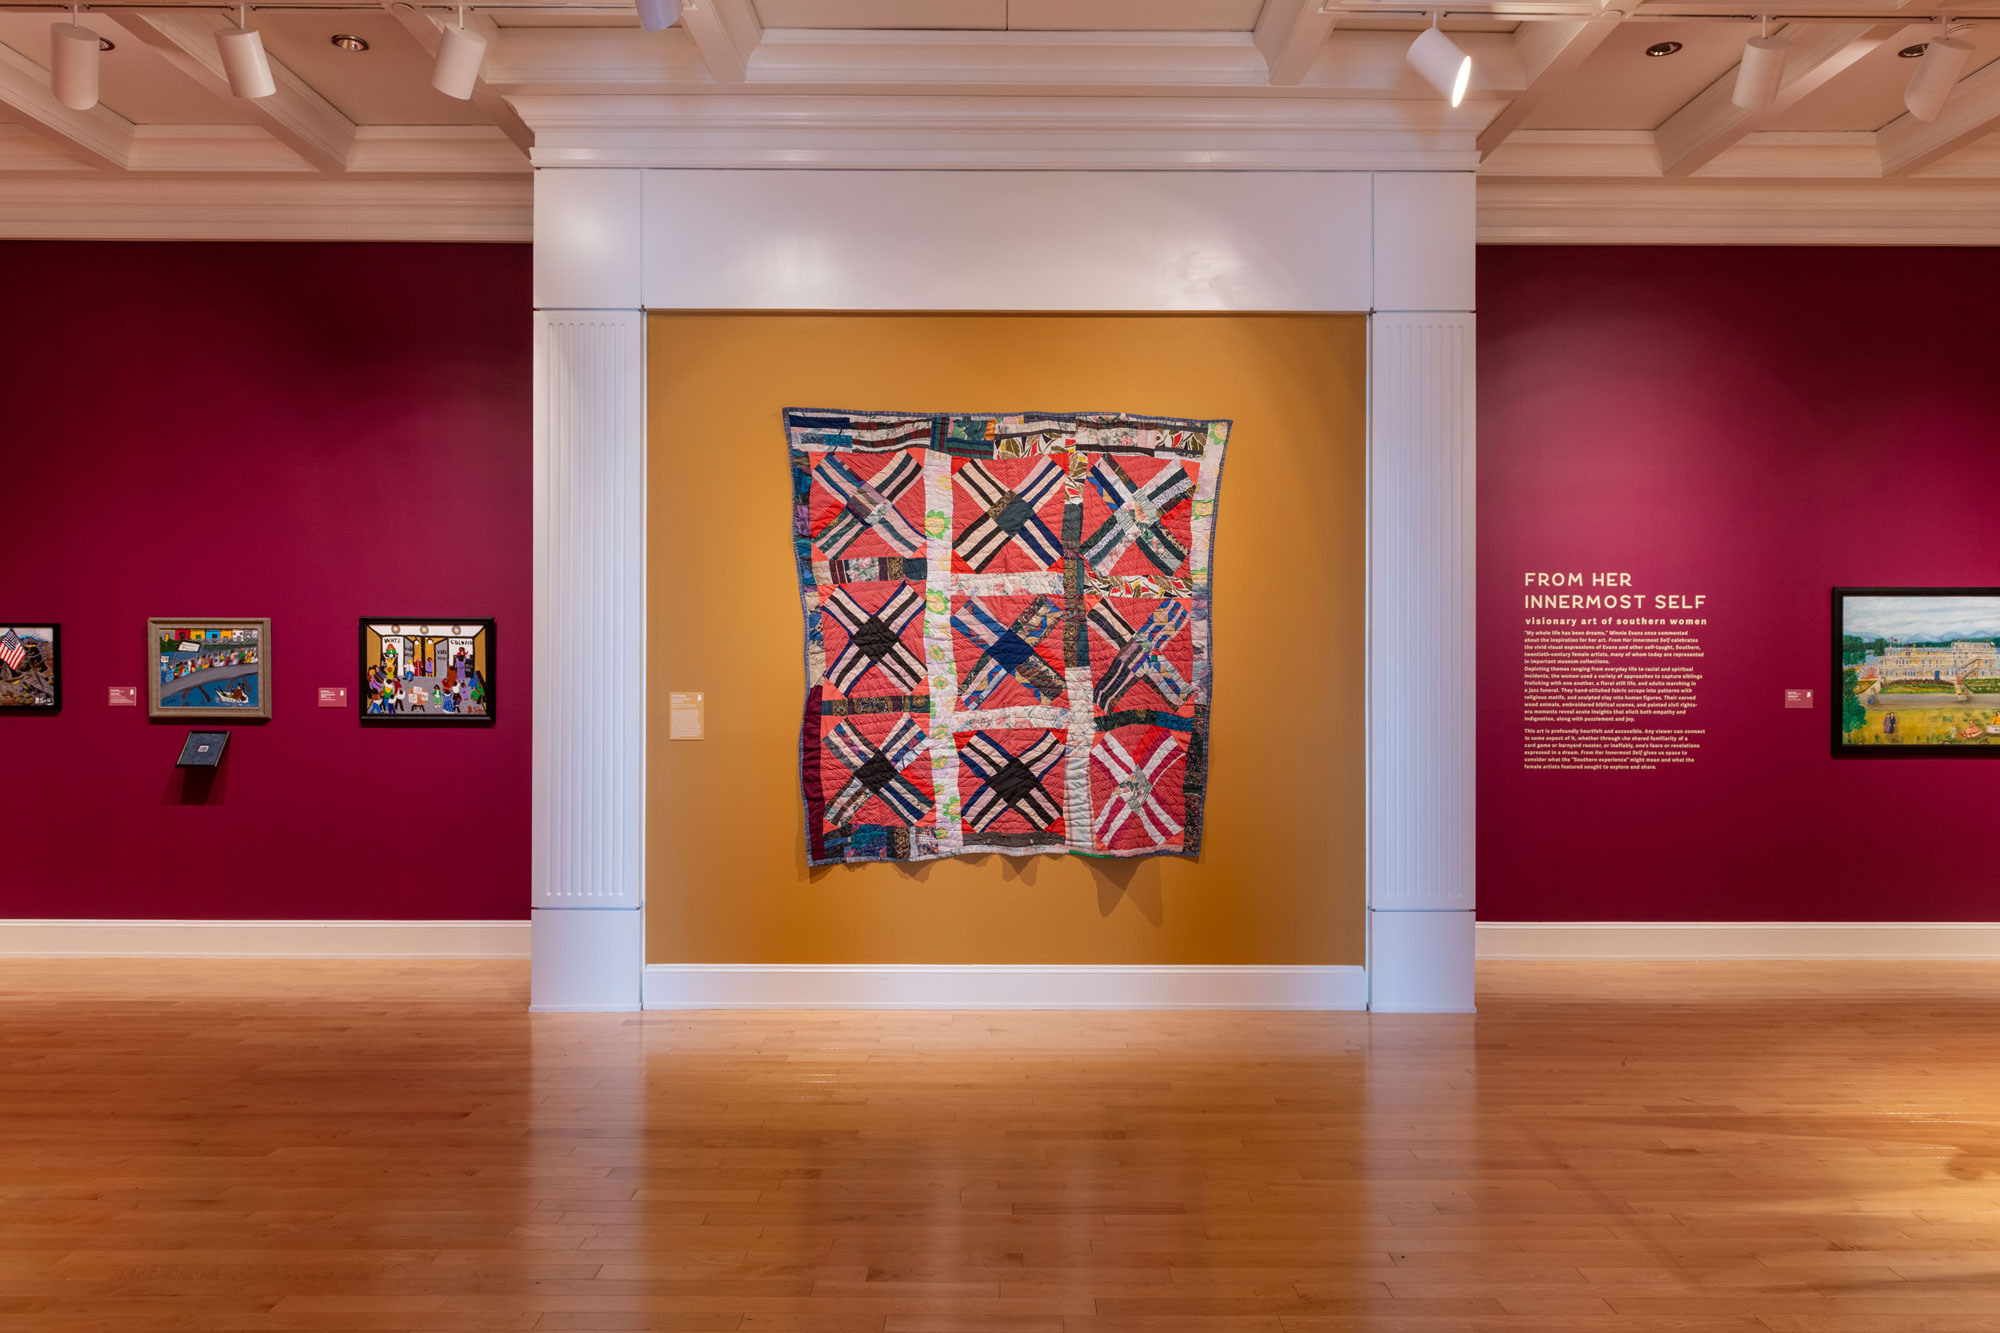 Gallery installation of quilt